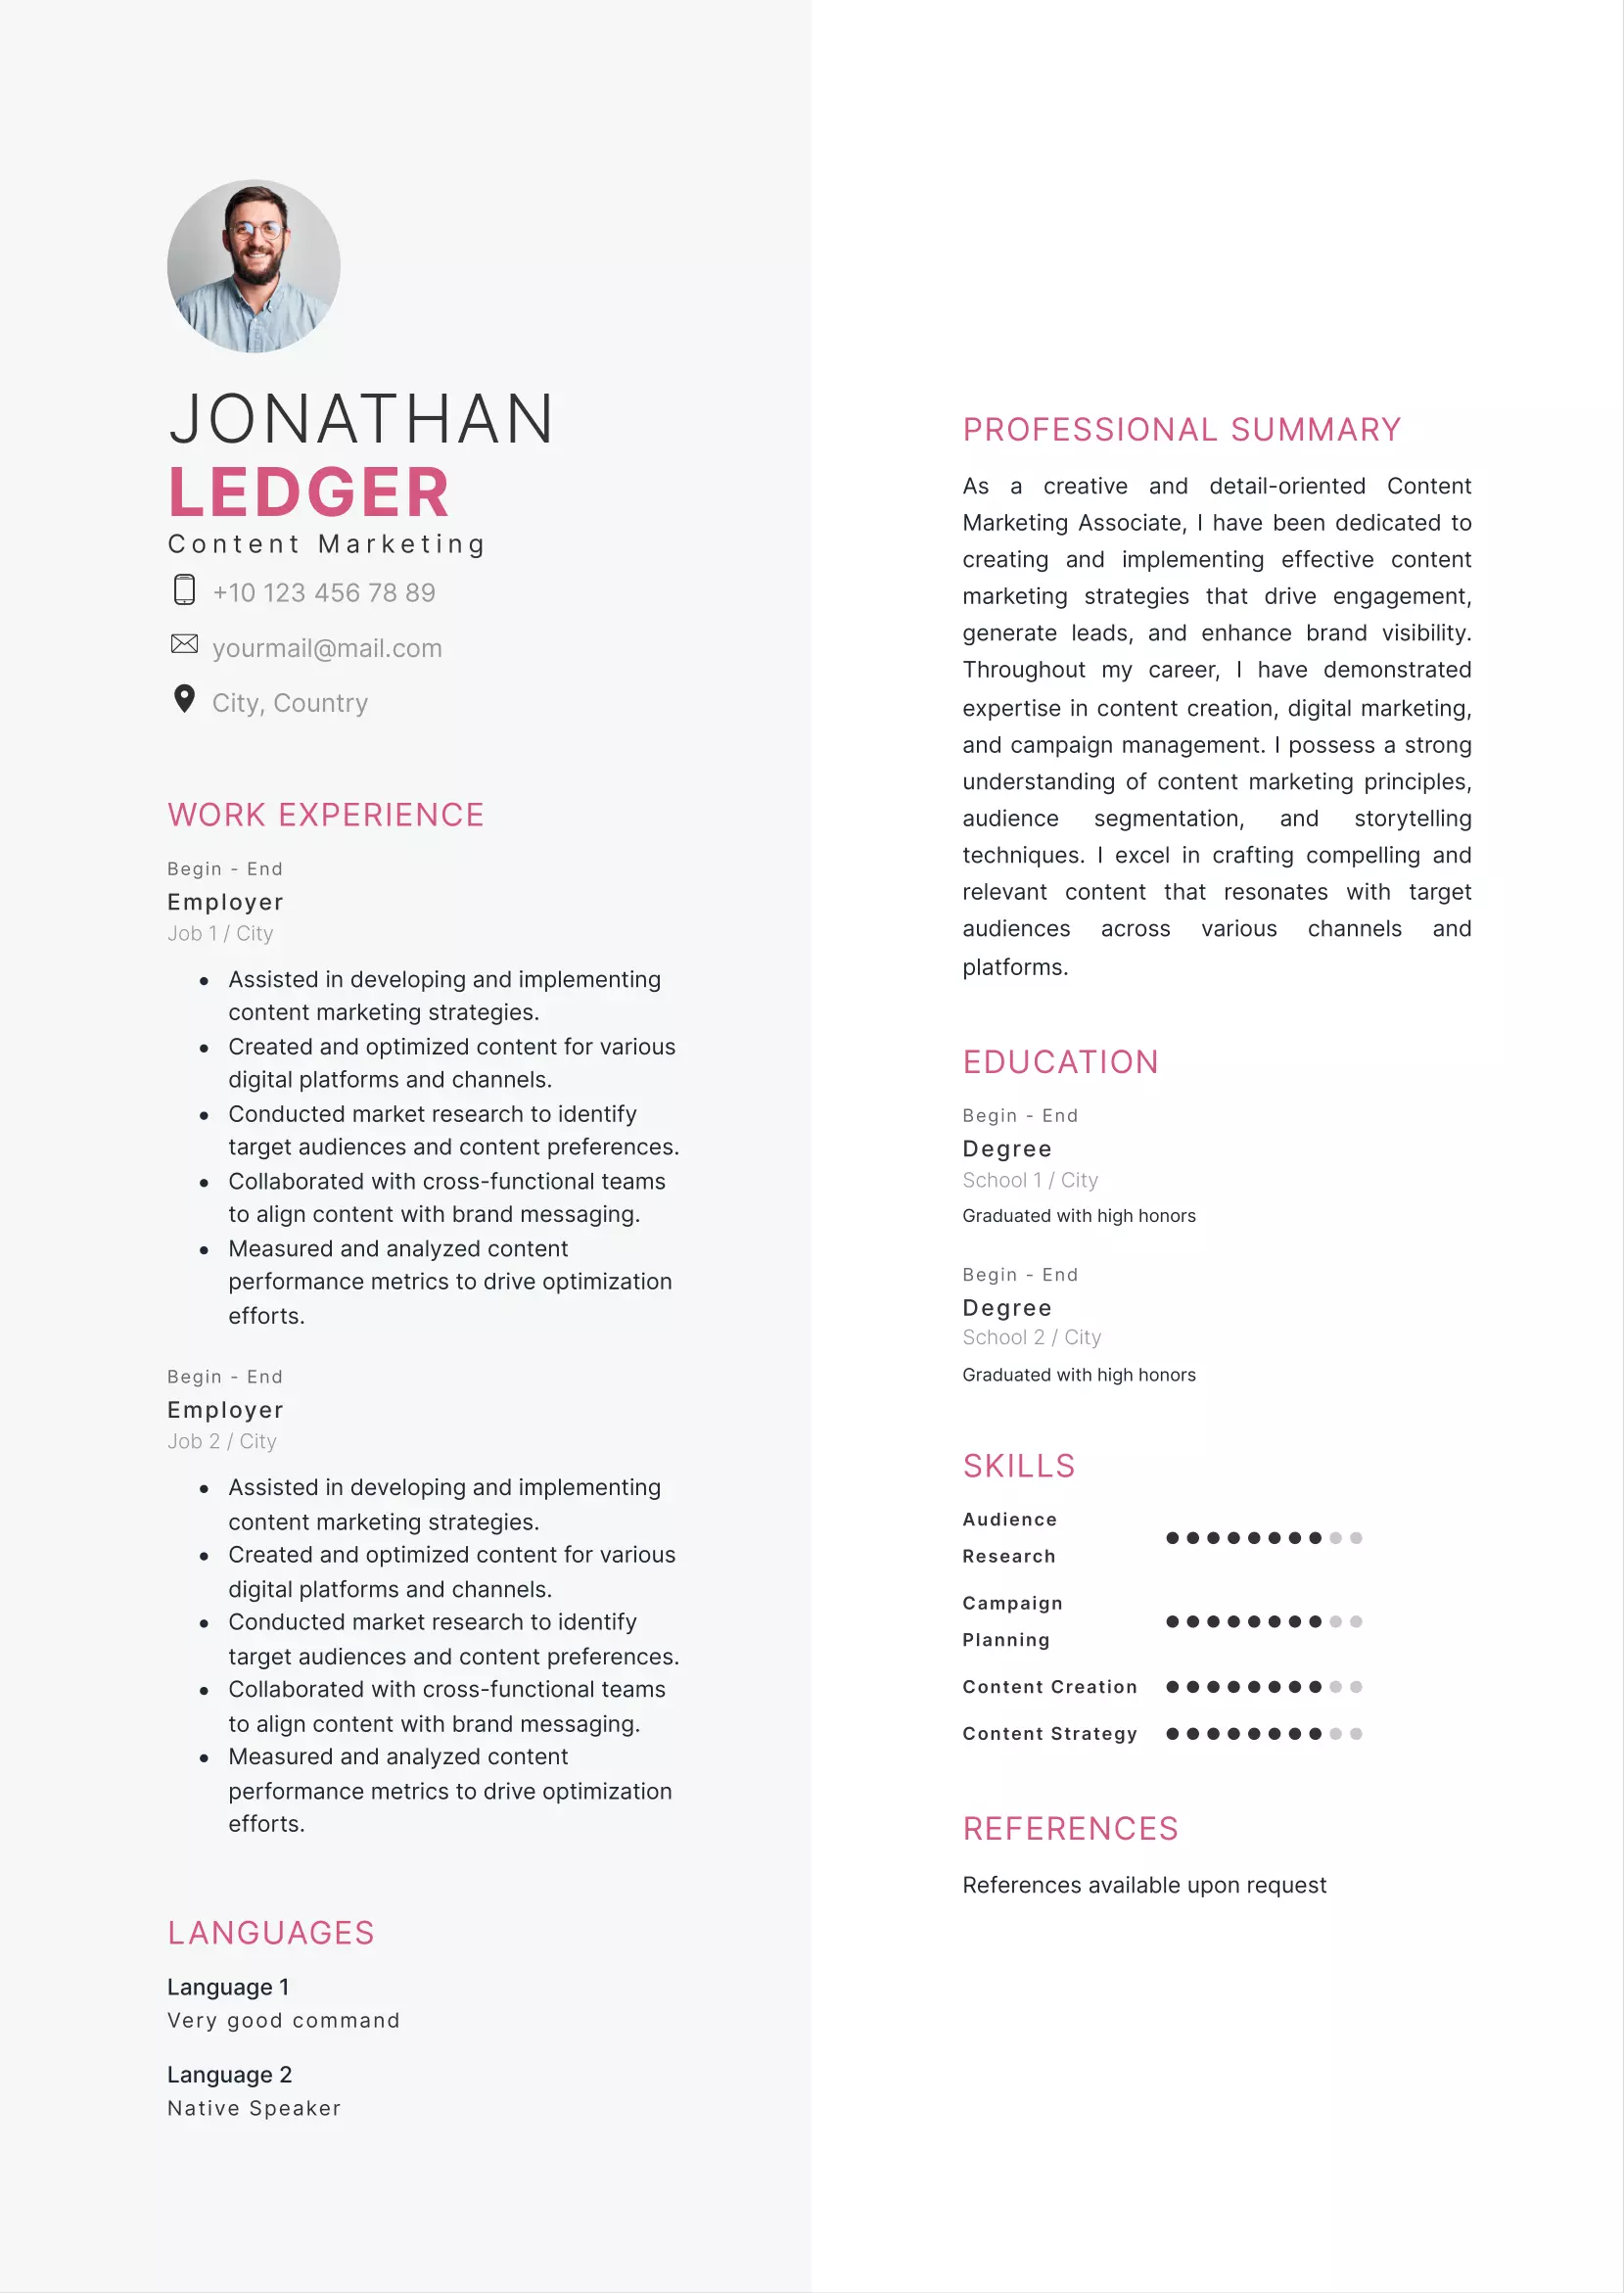 Content marketing resume CV